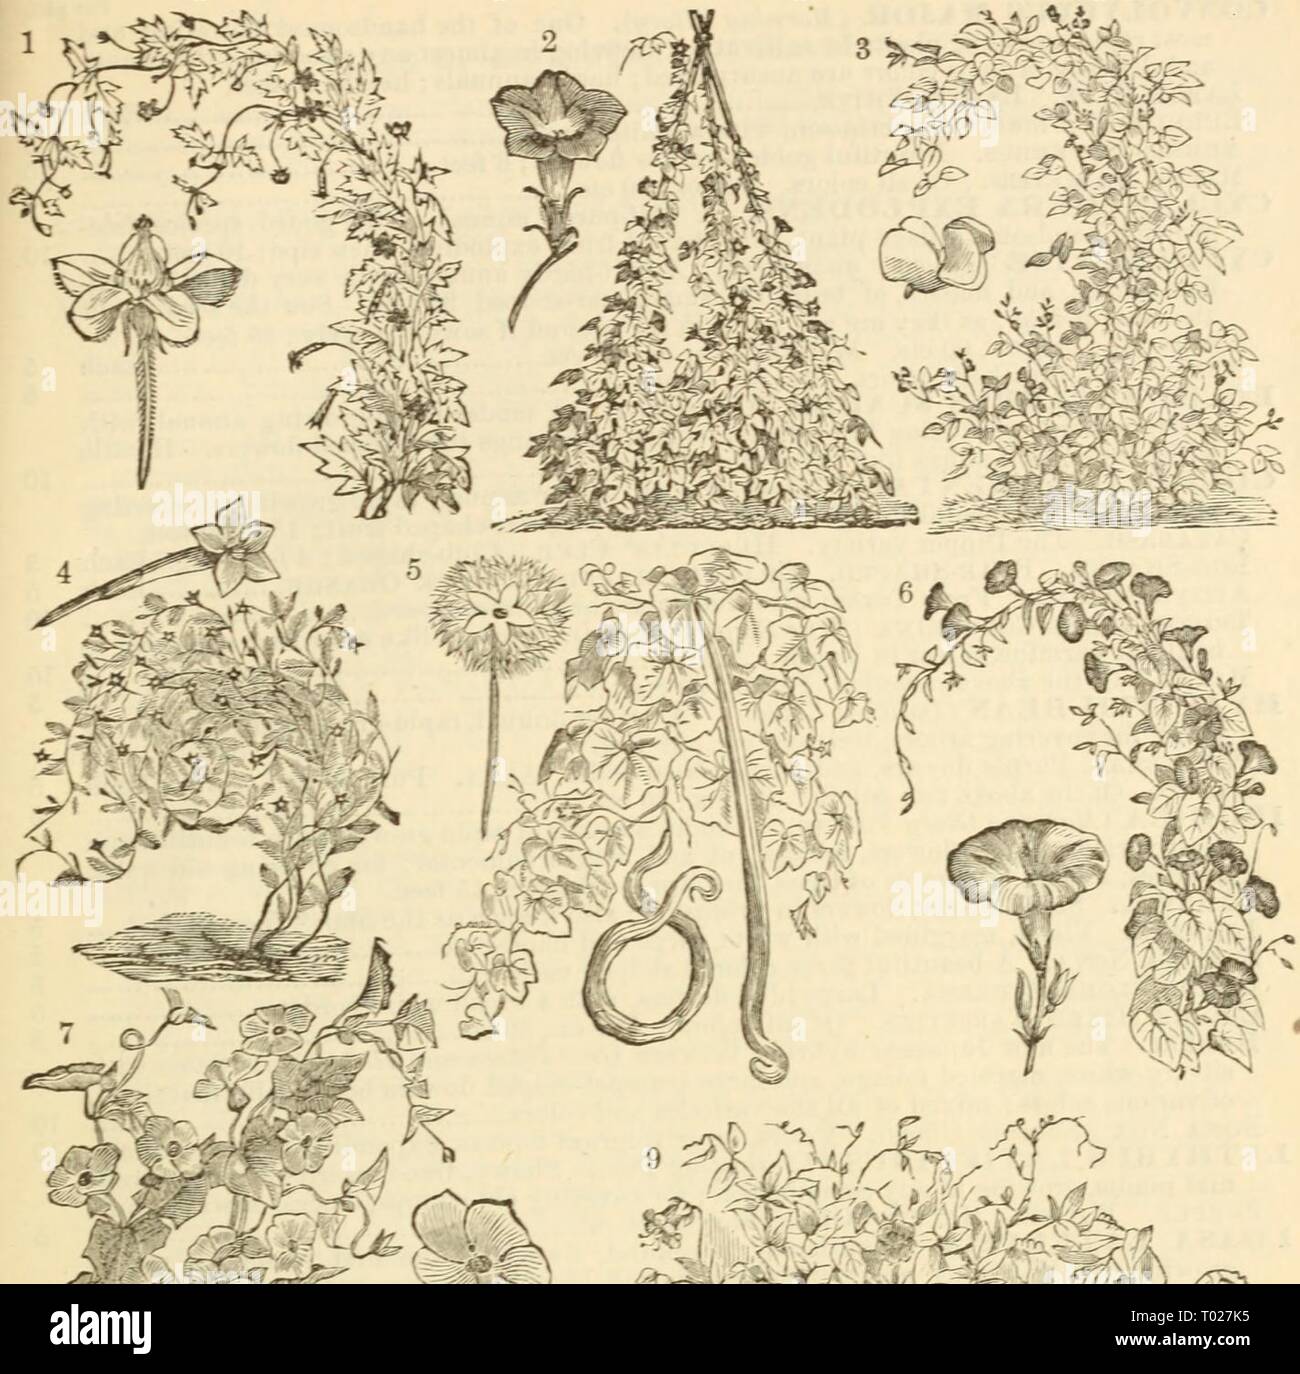 Dreer's garden calendar : 1880 . dreersgardencale1880henr Year: 1880  Drccr 's Garden Calendar. 63    3. HyUINTH BeaX, or DOLICHOS LaBLAB. 7. THrNBERGI. ^ .R ETT. 4. CrPEESS Ti&gt;-£ Vaeiety. I &. Trop^olum &gt;Ujl= ^ aeiett. 9. COB-EA SCANDF.NS. Stock Photo